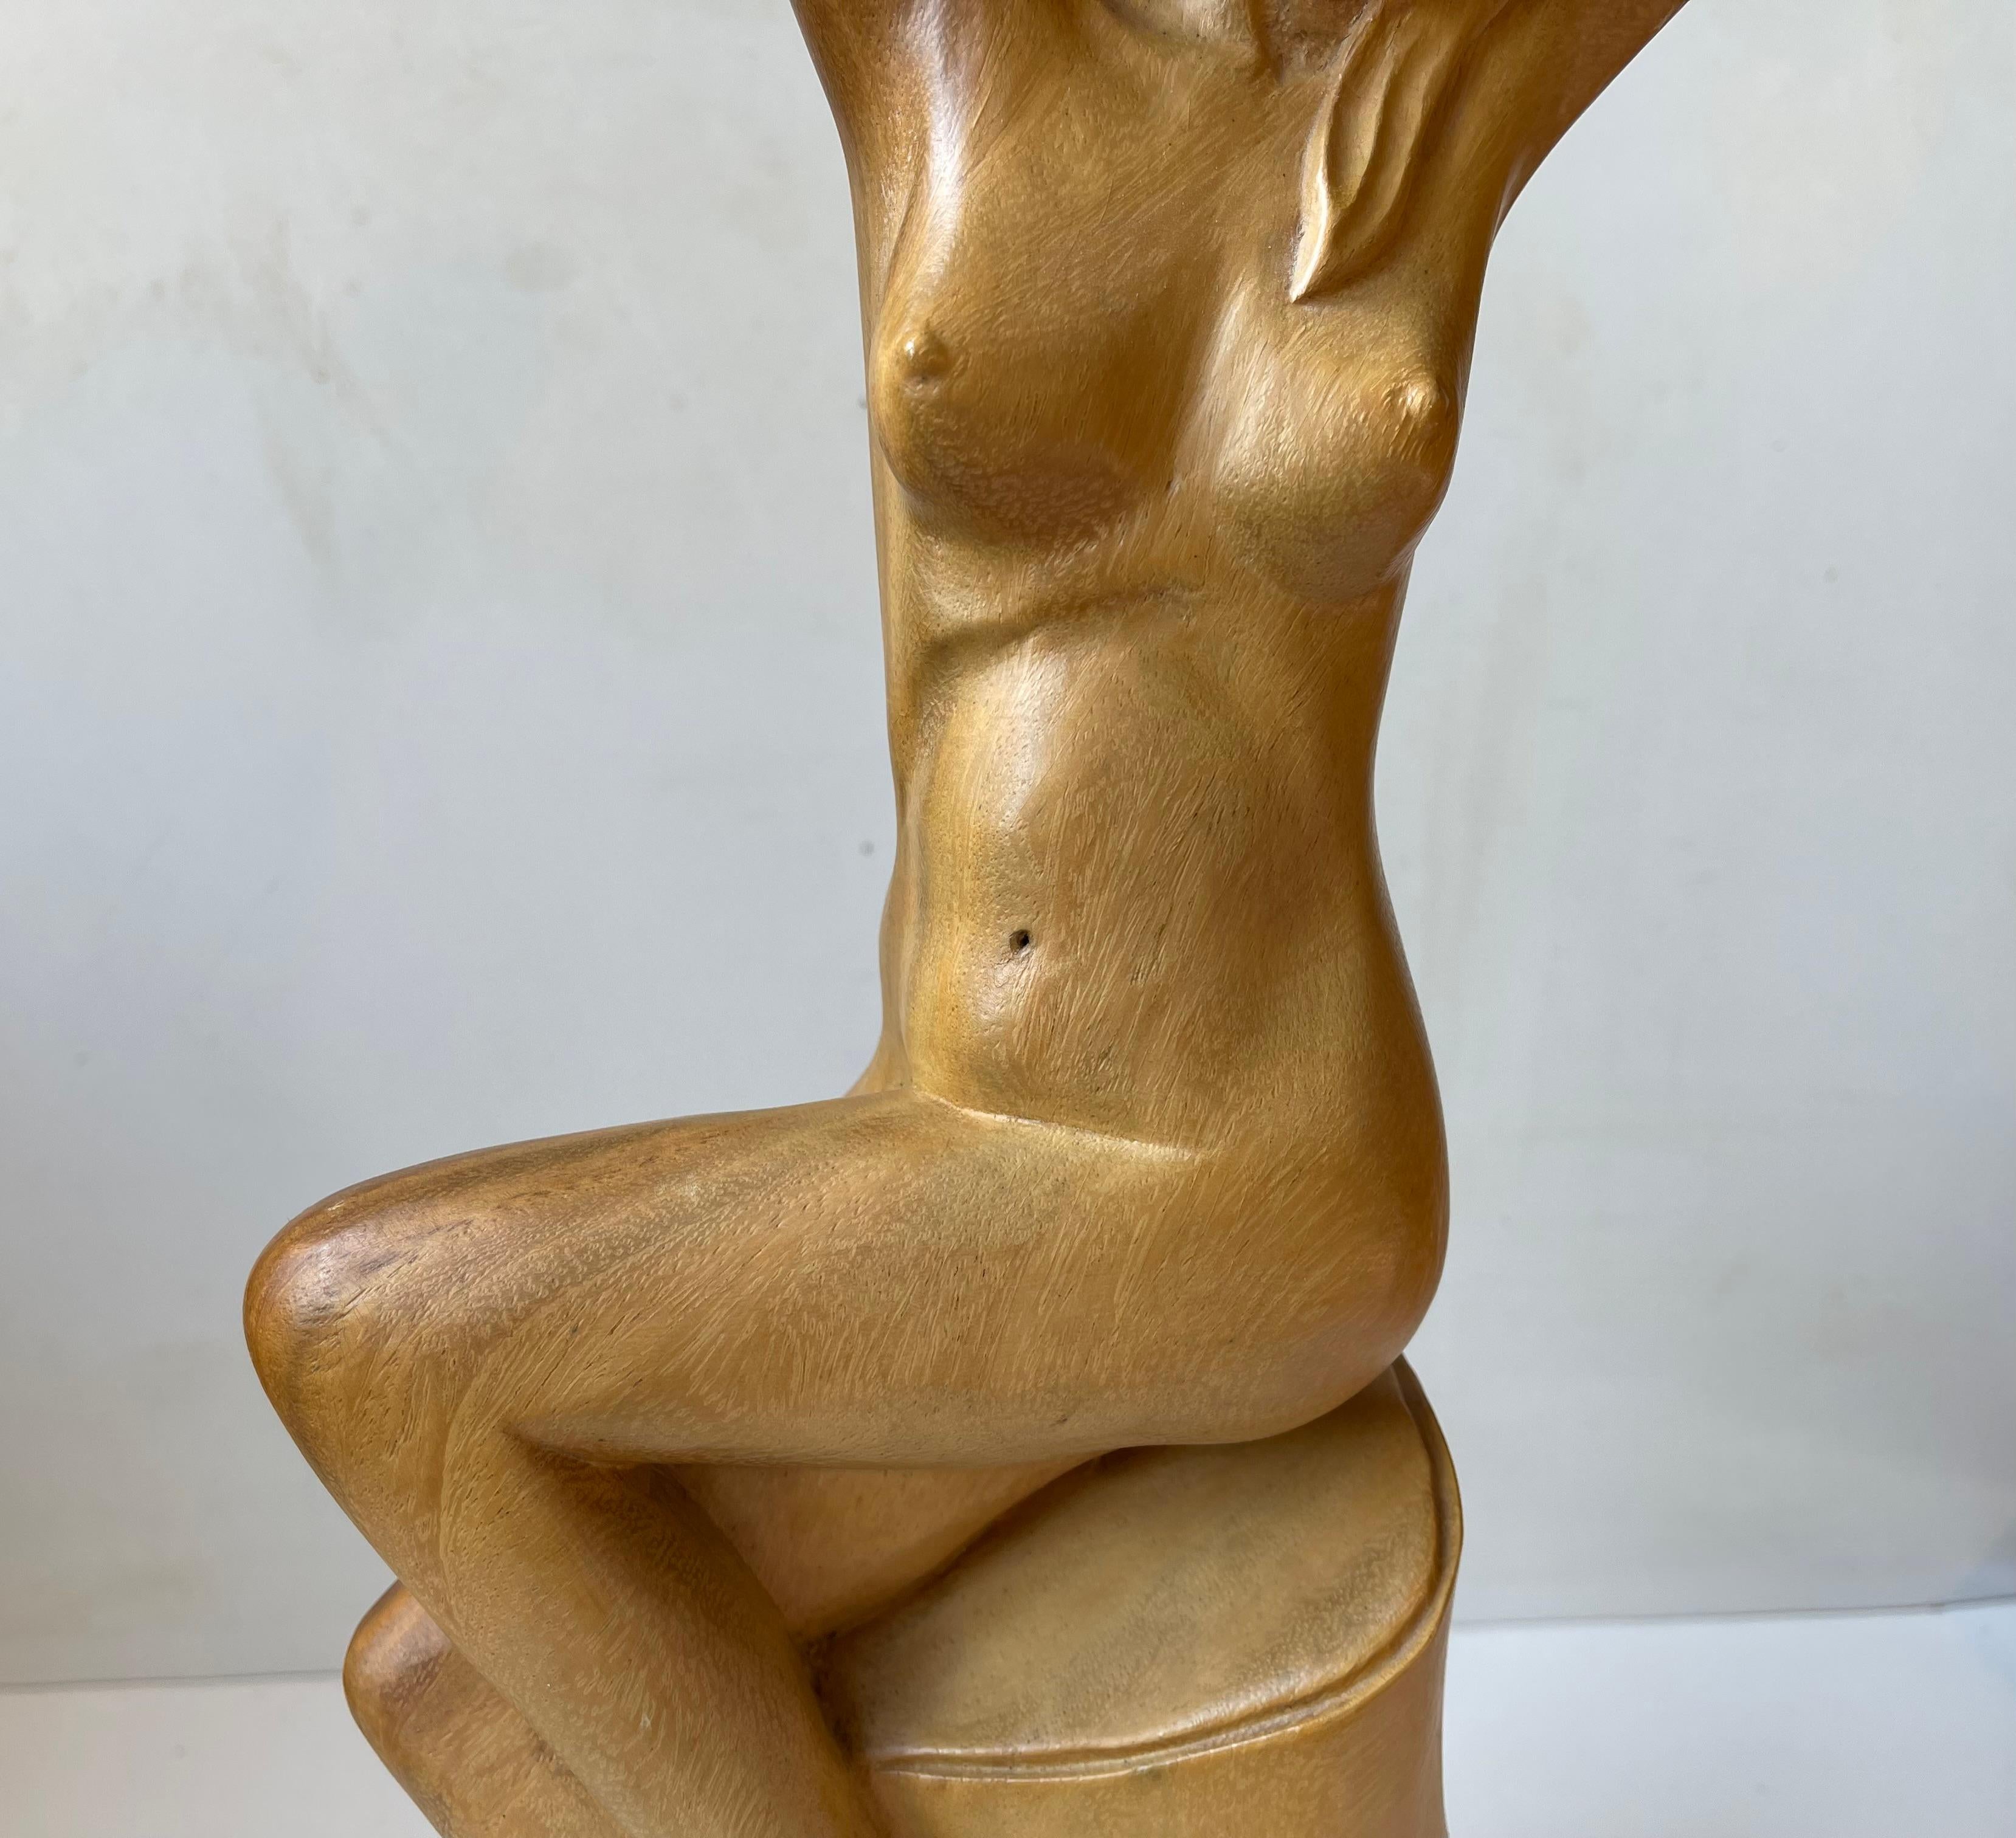 Scandinavian Art Deco Sculpture of Nude Female in Hand-Carved Wood, 1940s Scandinavia For Sale